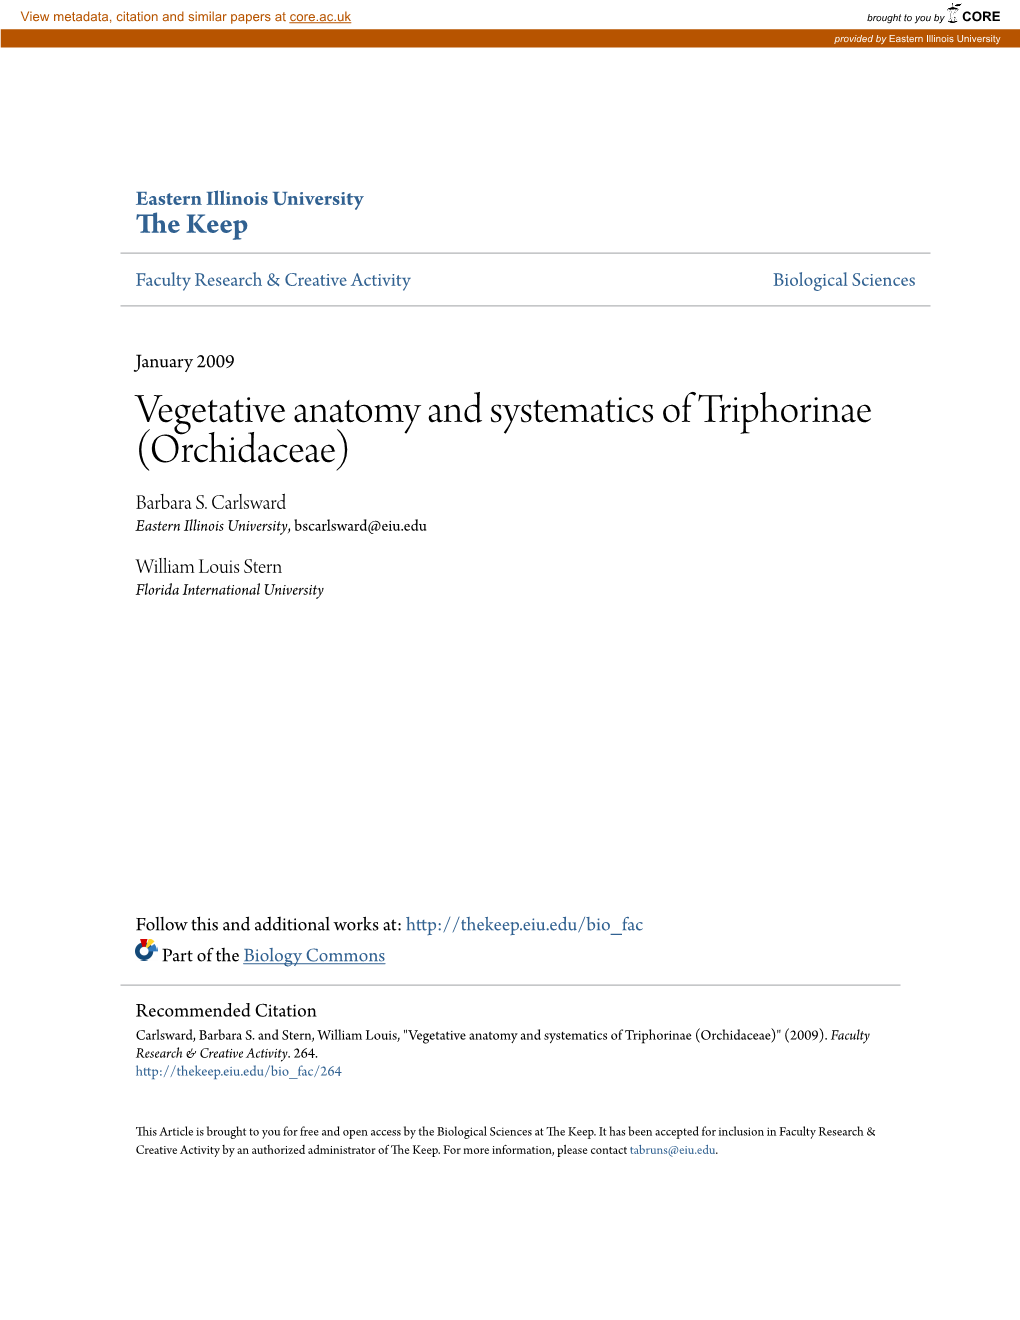 Vegetative Anatomy and Systematics of Triphorinae (Orchidaceae) Barbara S